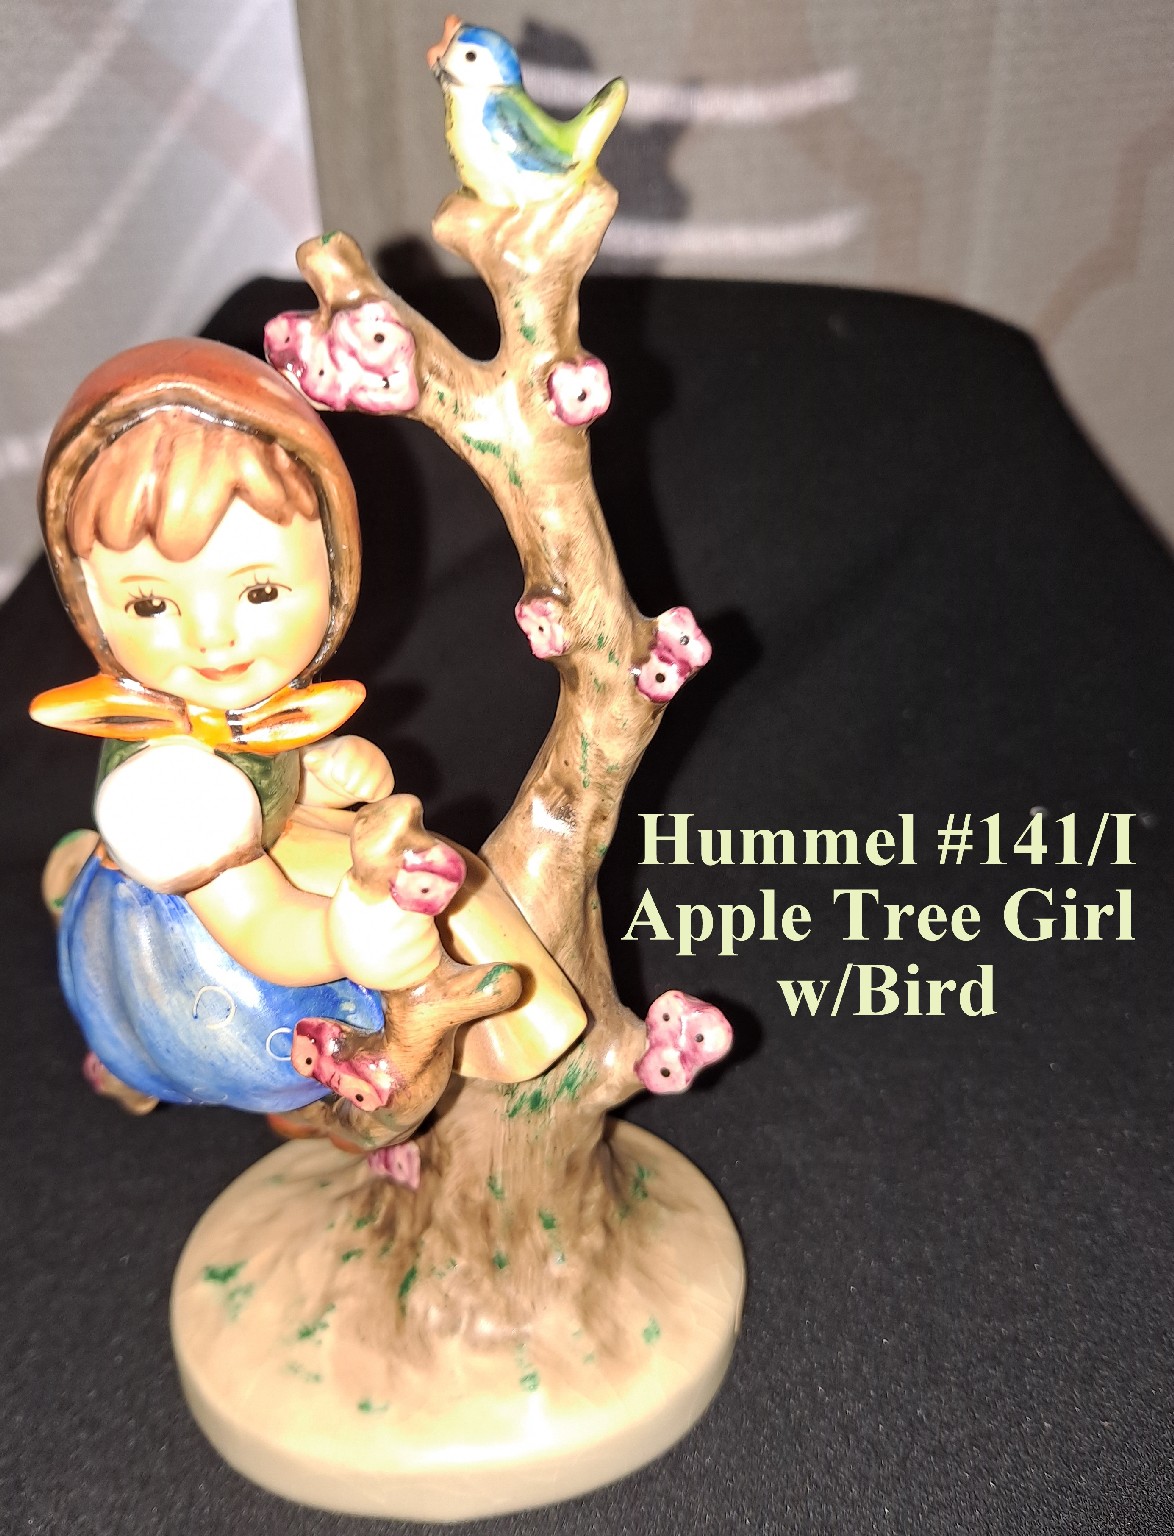 Apple Tree Girl w/Bird